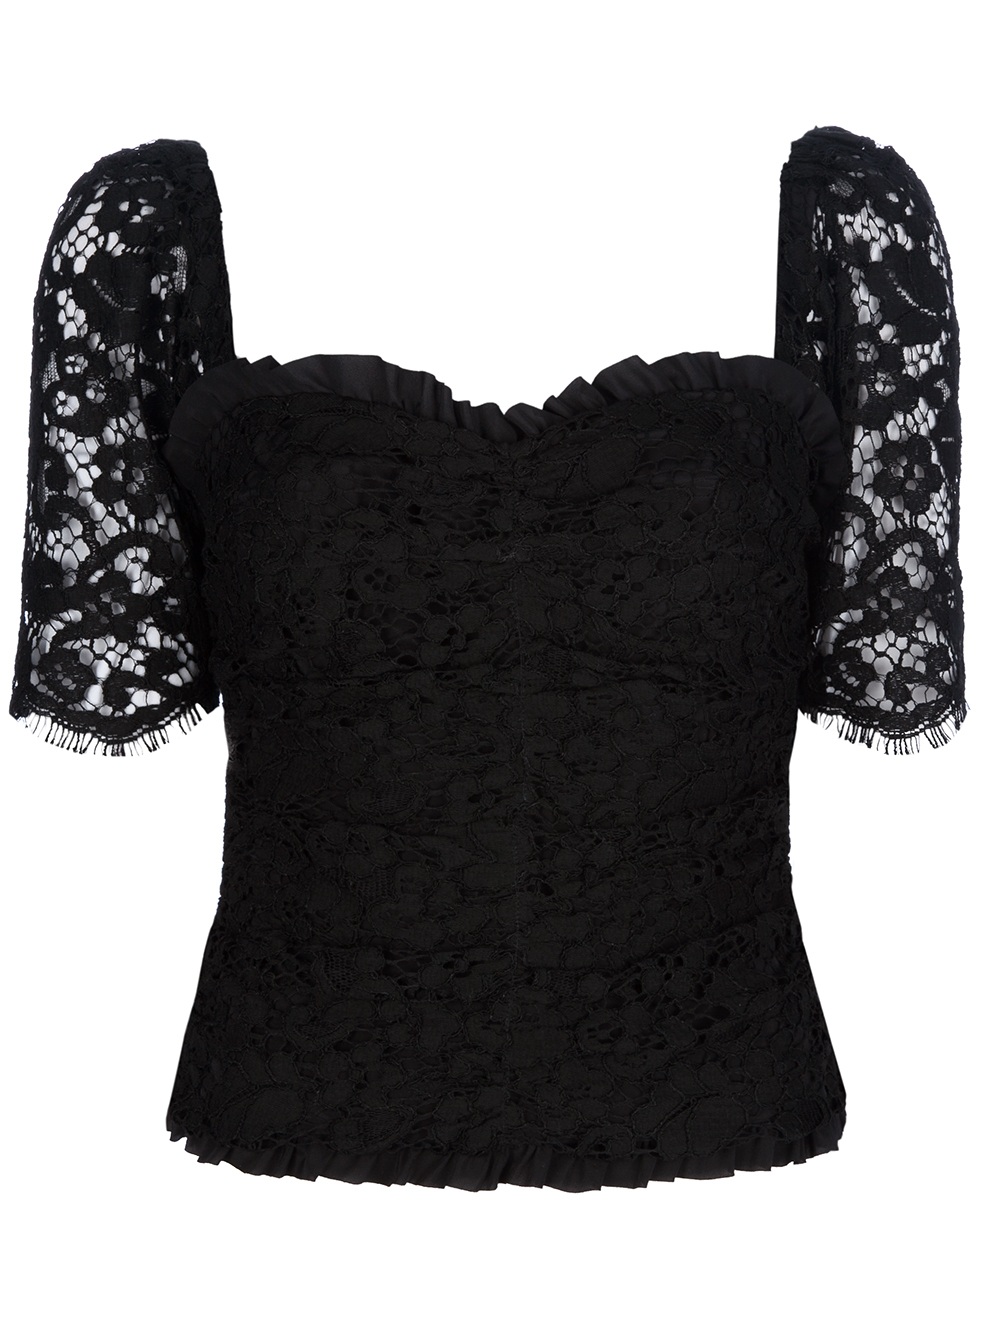 Lyst - Dolce & Gabbana Lace Bustier Top in Black